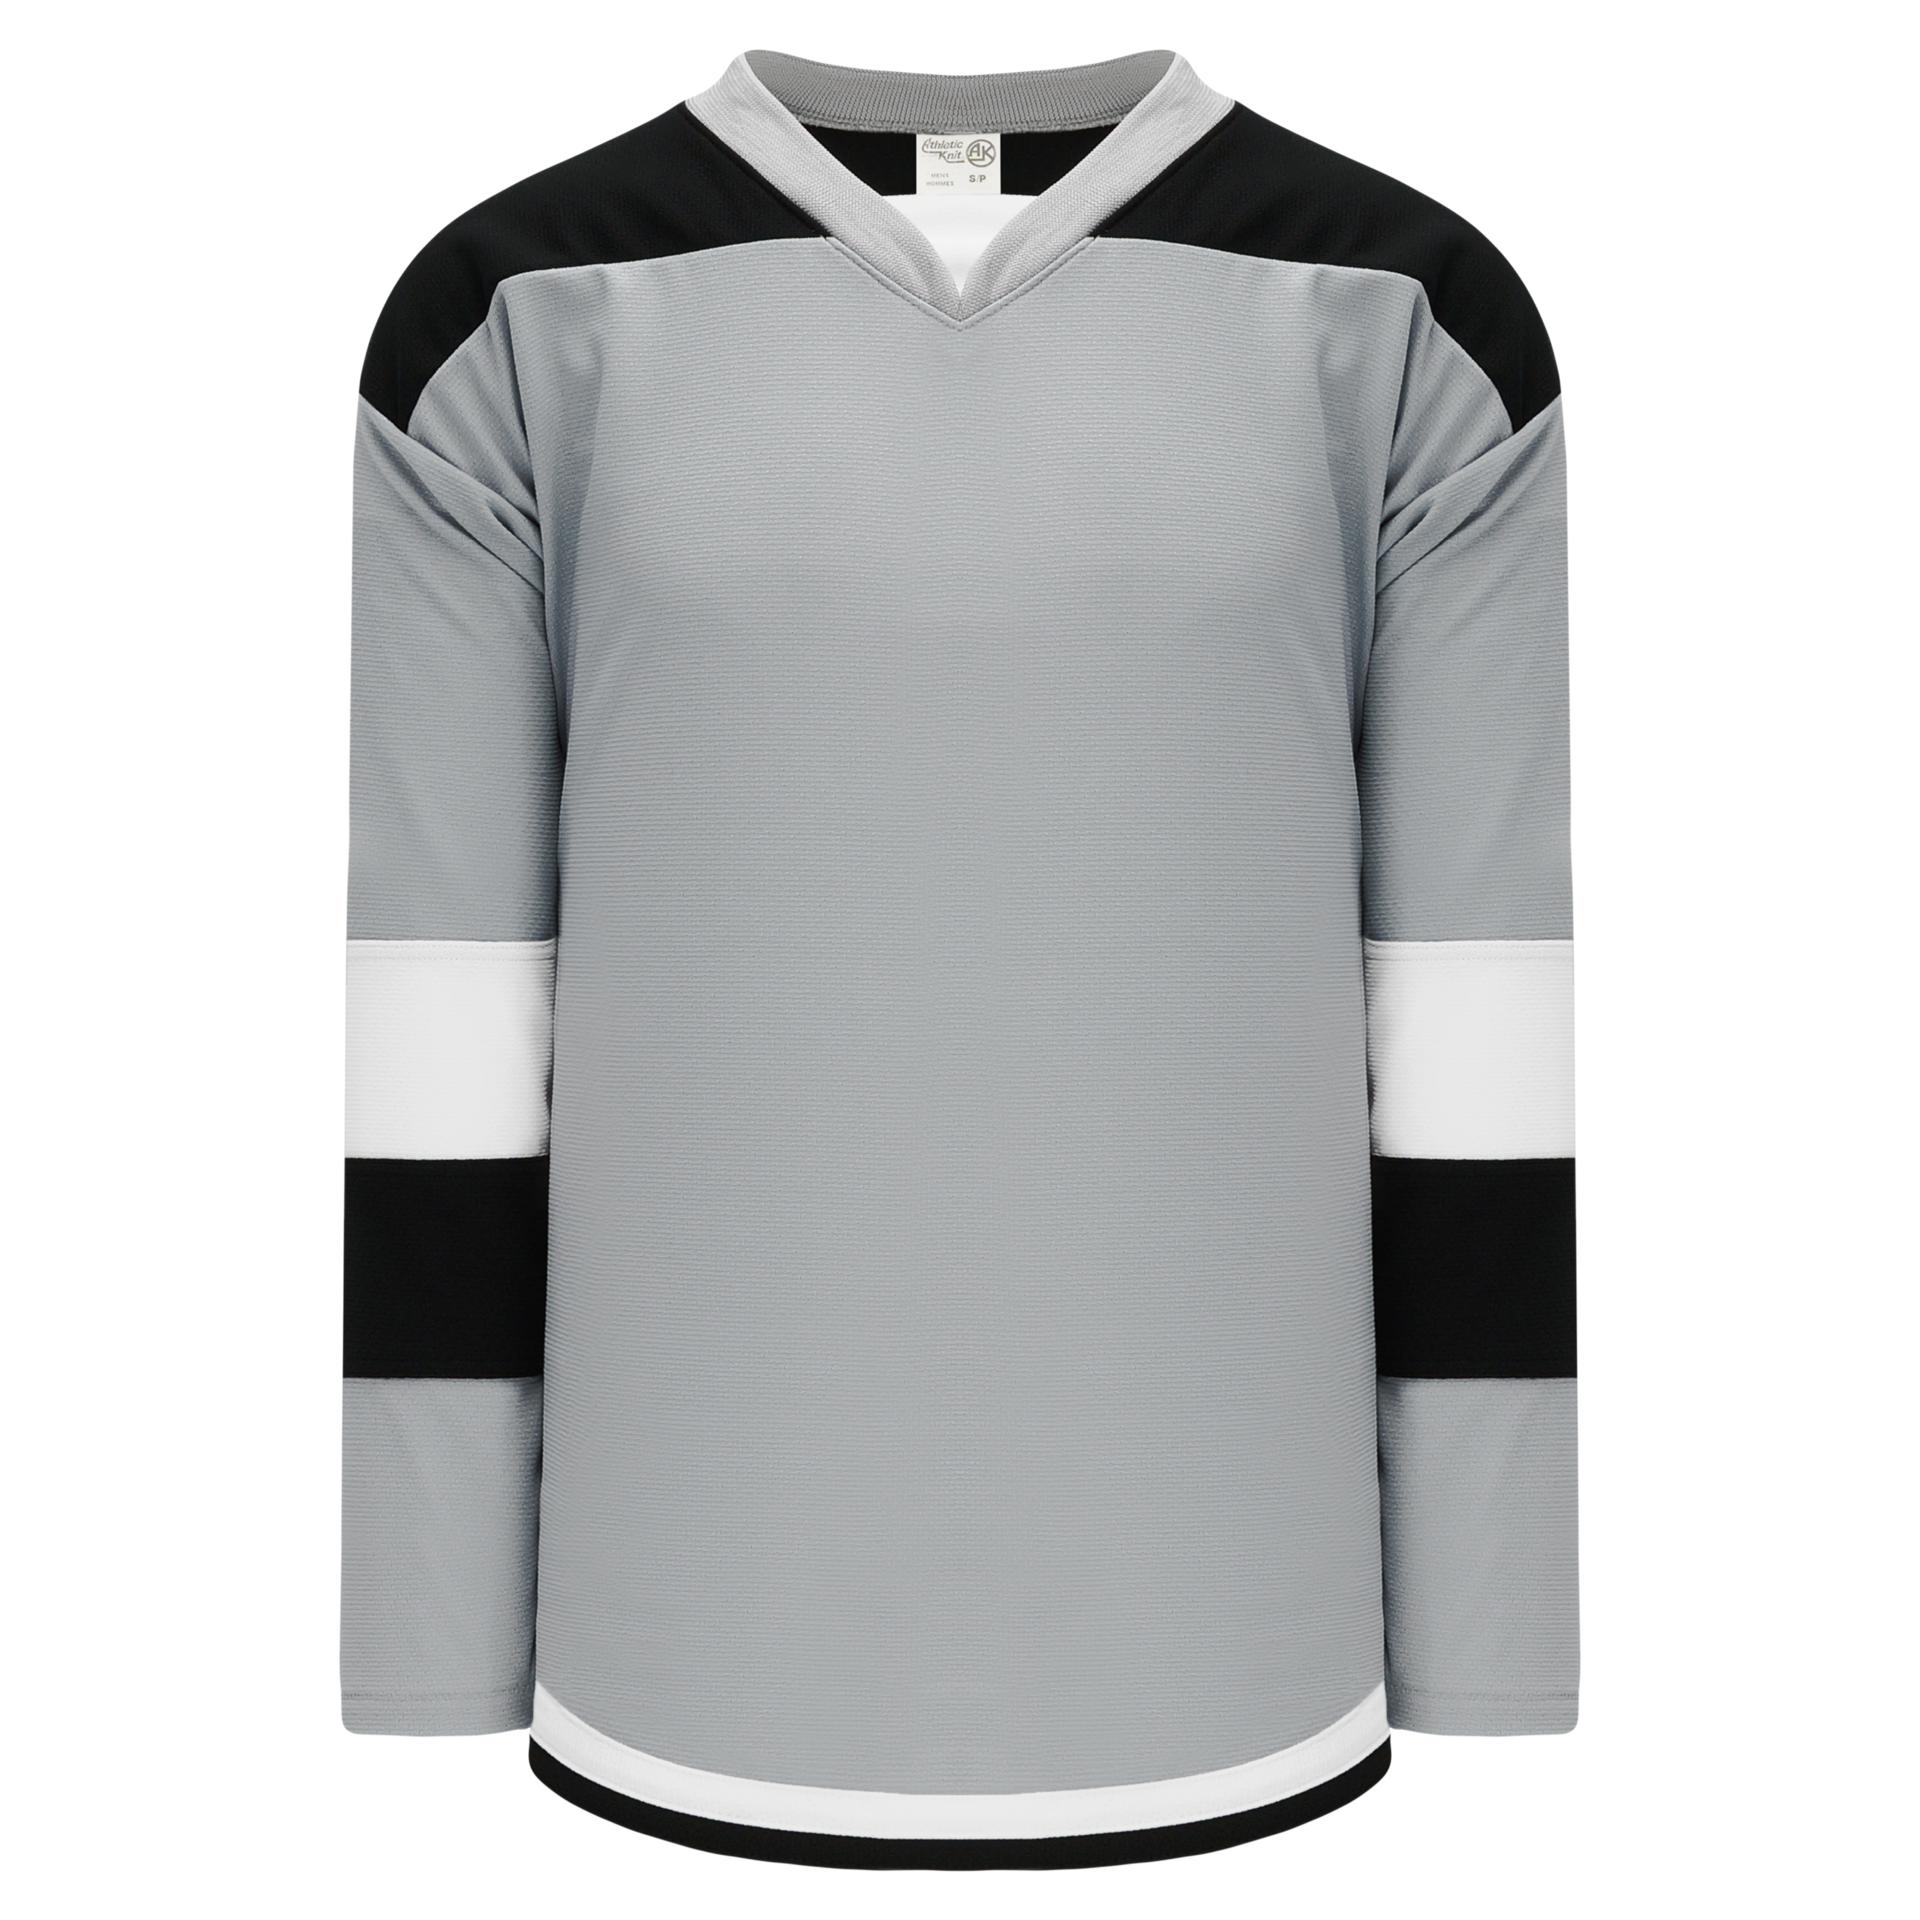 H7400-973 Grey/Black/White Blank League Jerseys